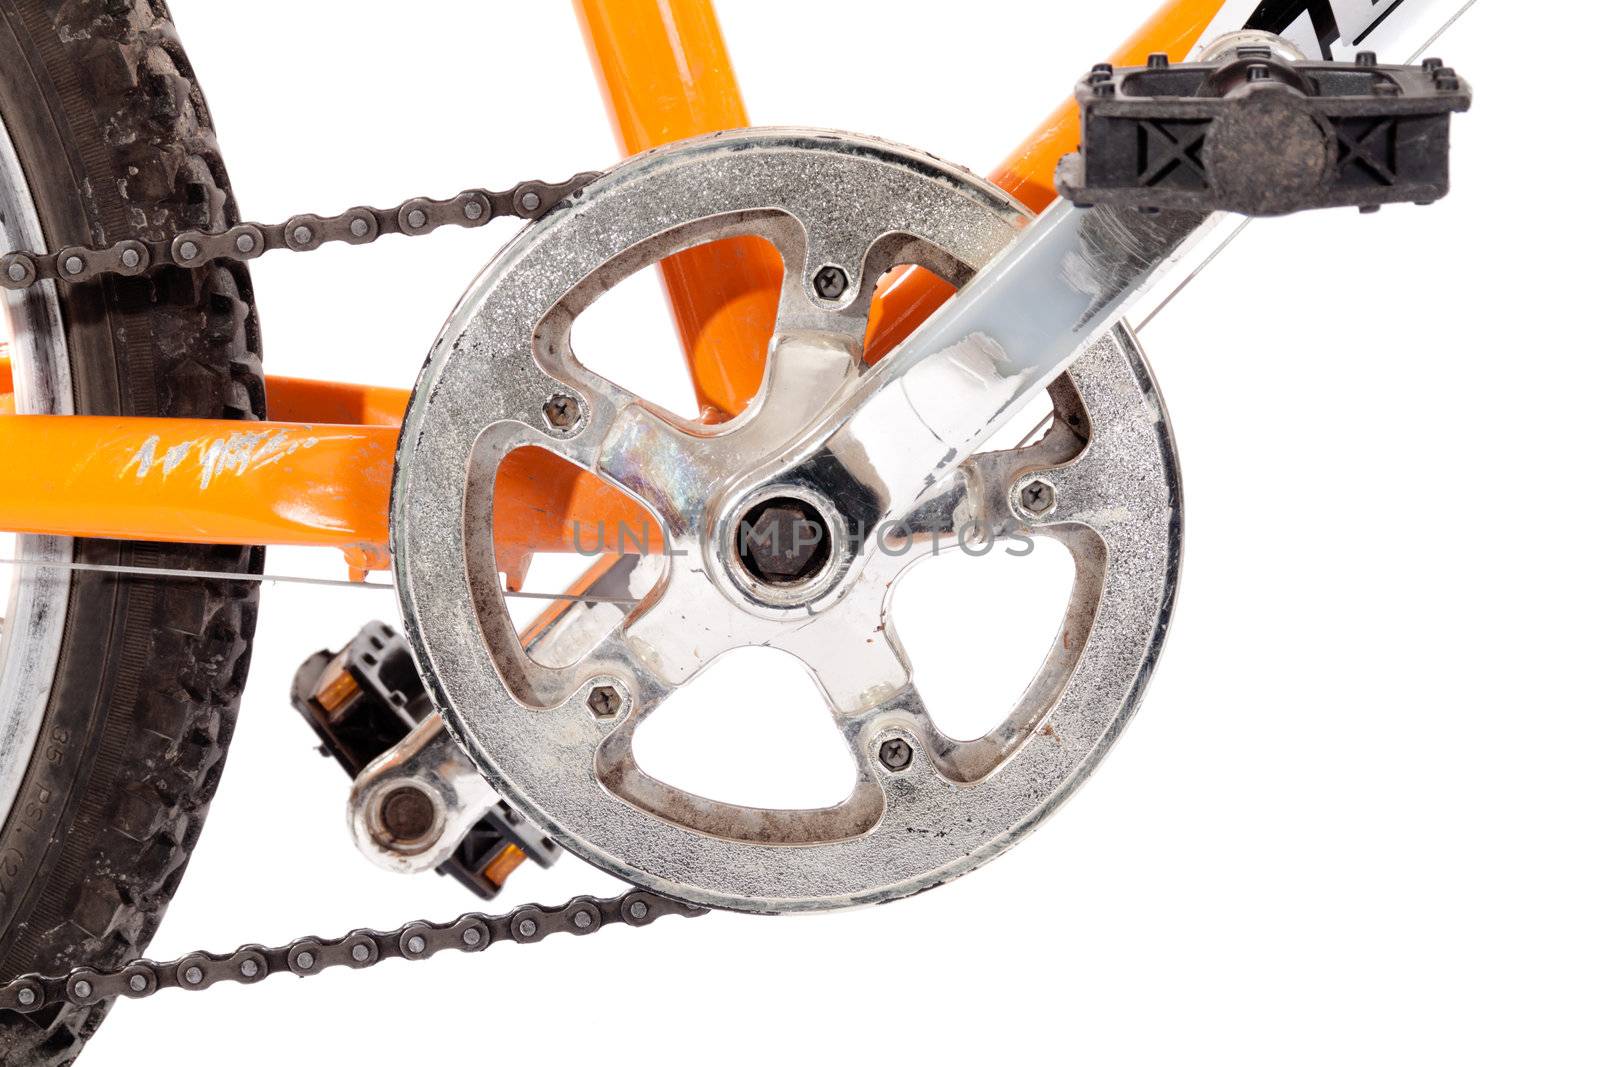 Bike gear wheel and pedal